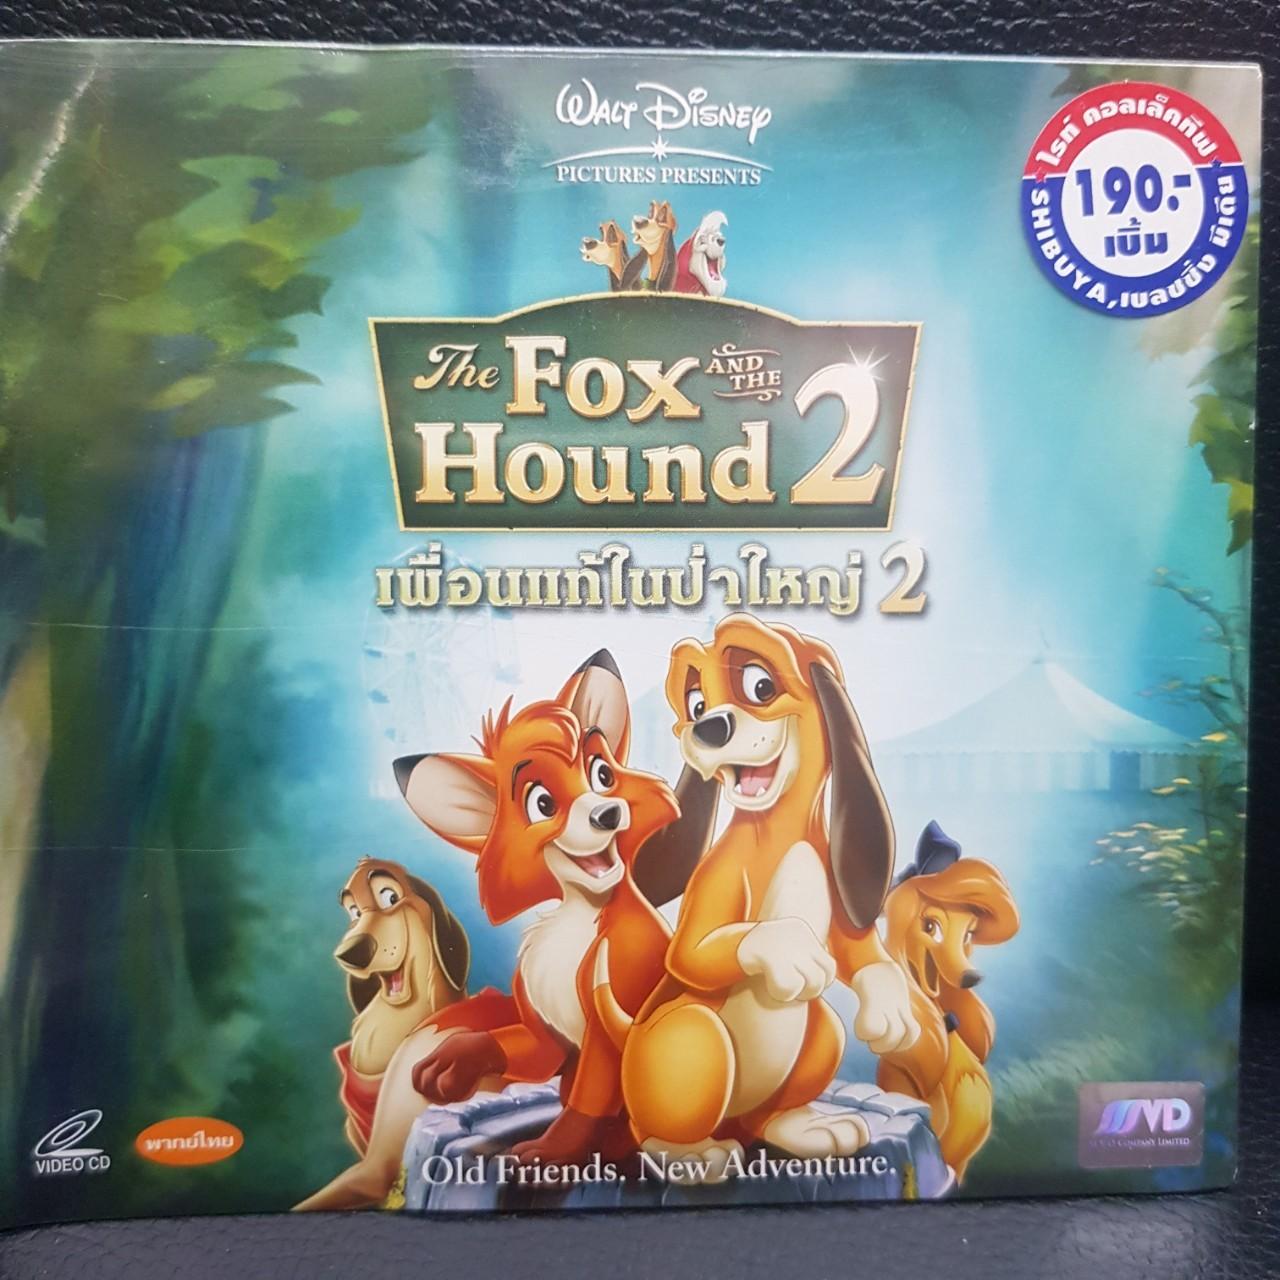 VCDหนัง เพื่อนแท้ในป่าใหญ่2 THE FOX AND THE HOUND ฉบับ พากย์ไทย (MVDVCD190- เพื่อนแท้ในป่าใหญ่2THEFOXANDTHEHOUND) MVD cartoon disney ดิสนีย์ หนัง ภาพยนตร์ ดูหนังดีวีโอซีดี วีซีดี VCD มาสเตอร์แท้ STARMART